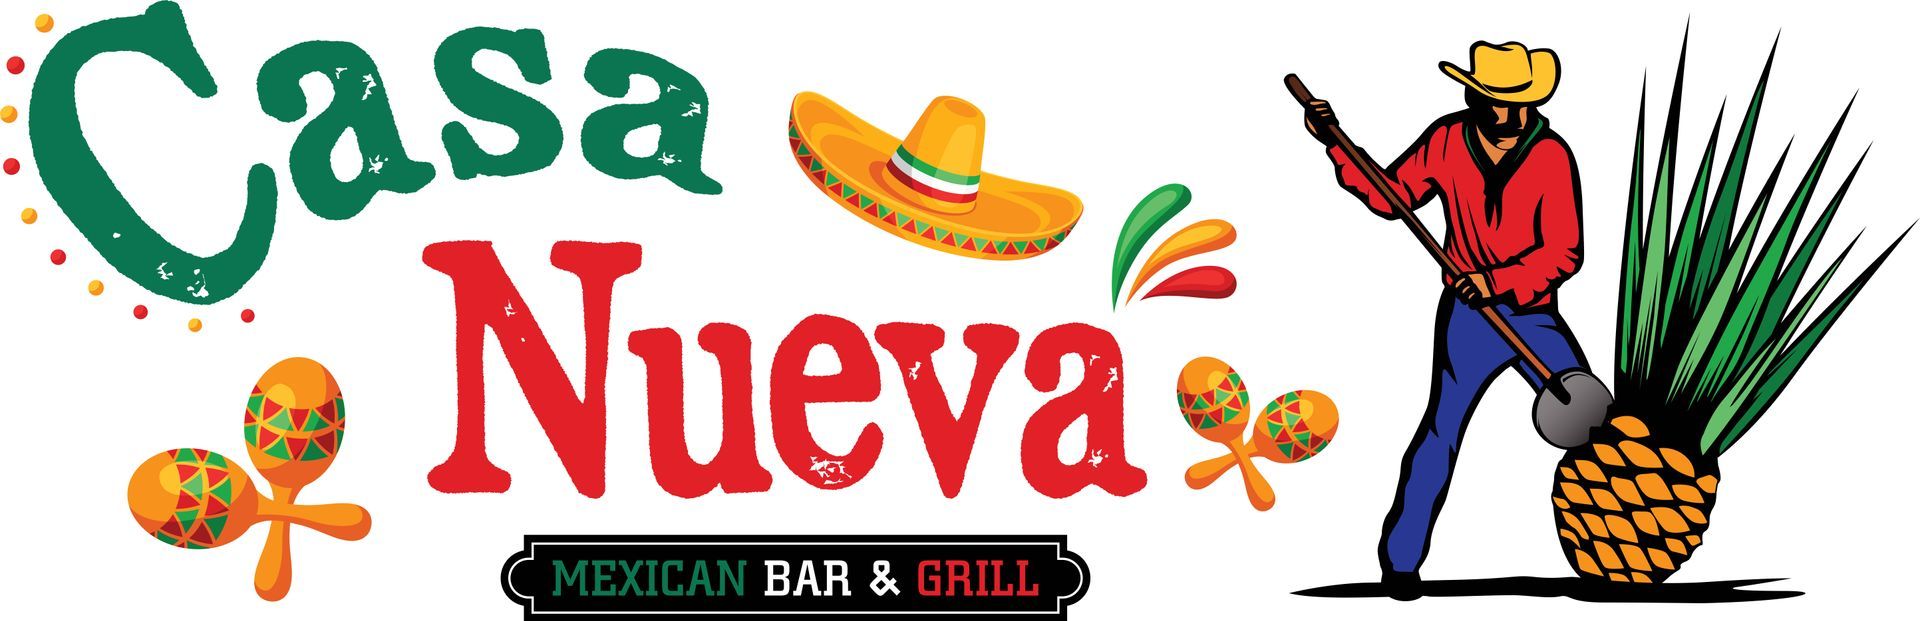 Casa Nueva Mexican Bar & Grill Inc. Logo